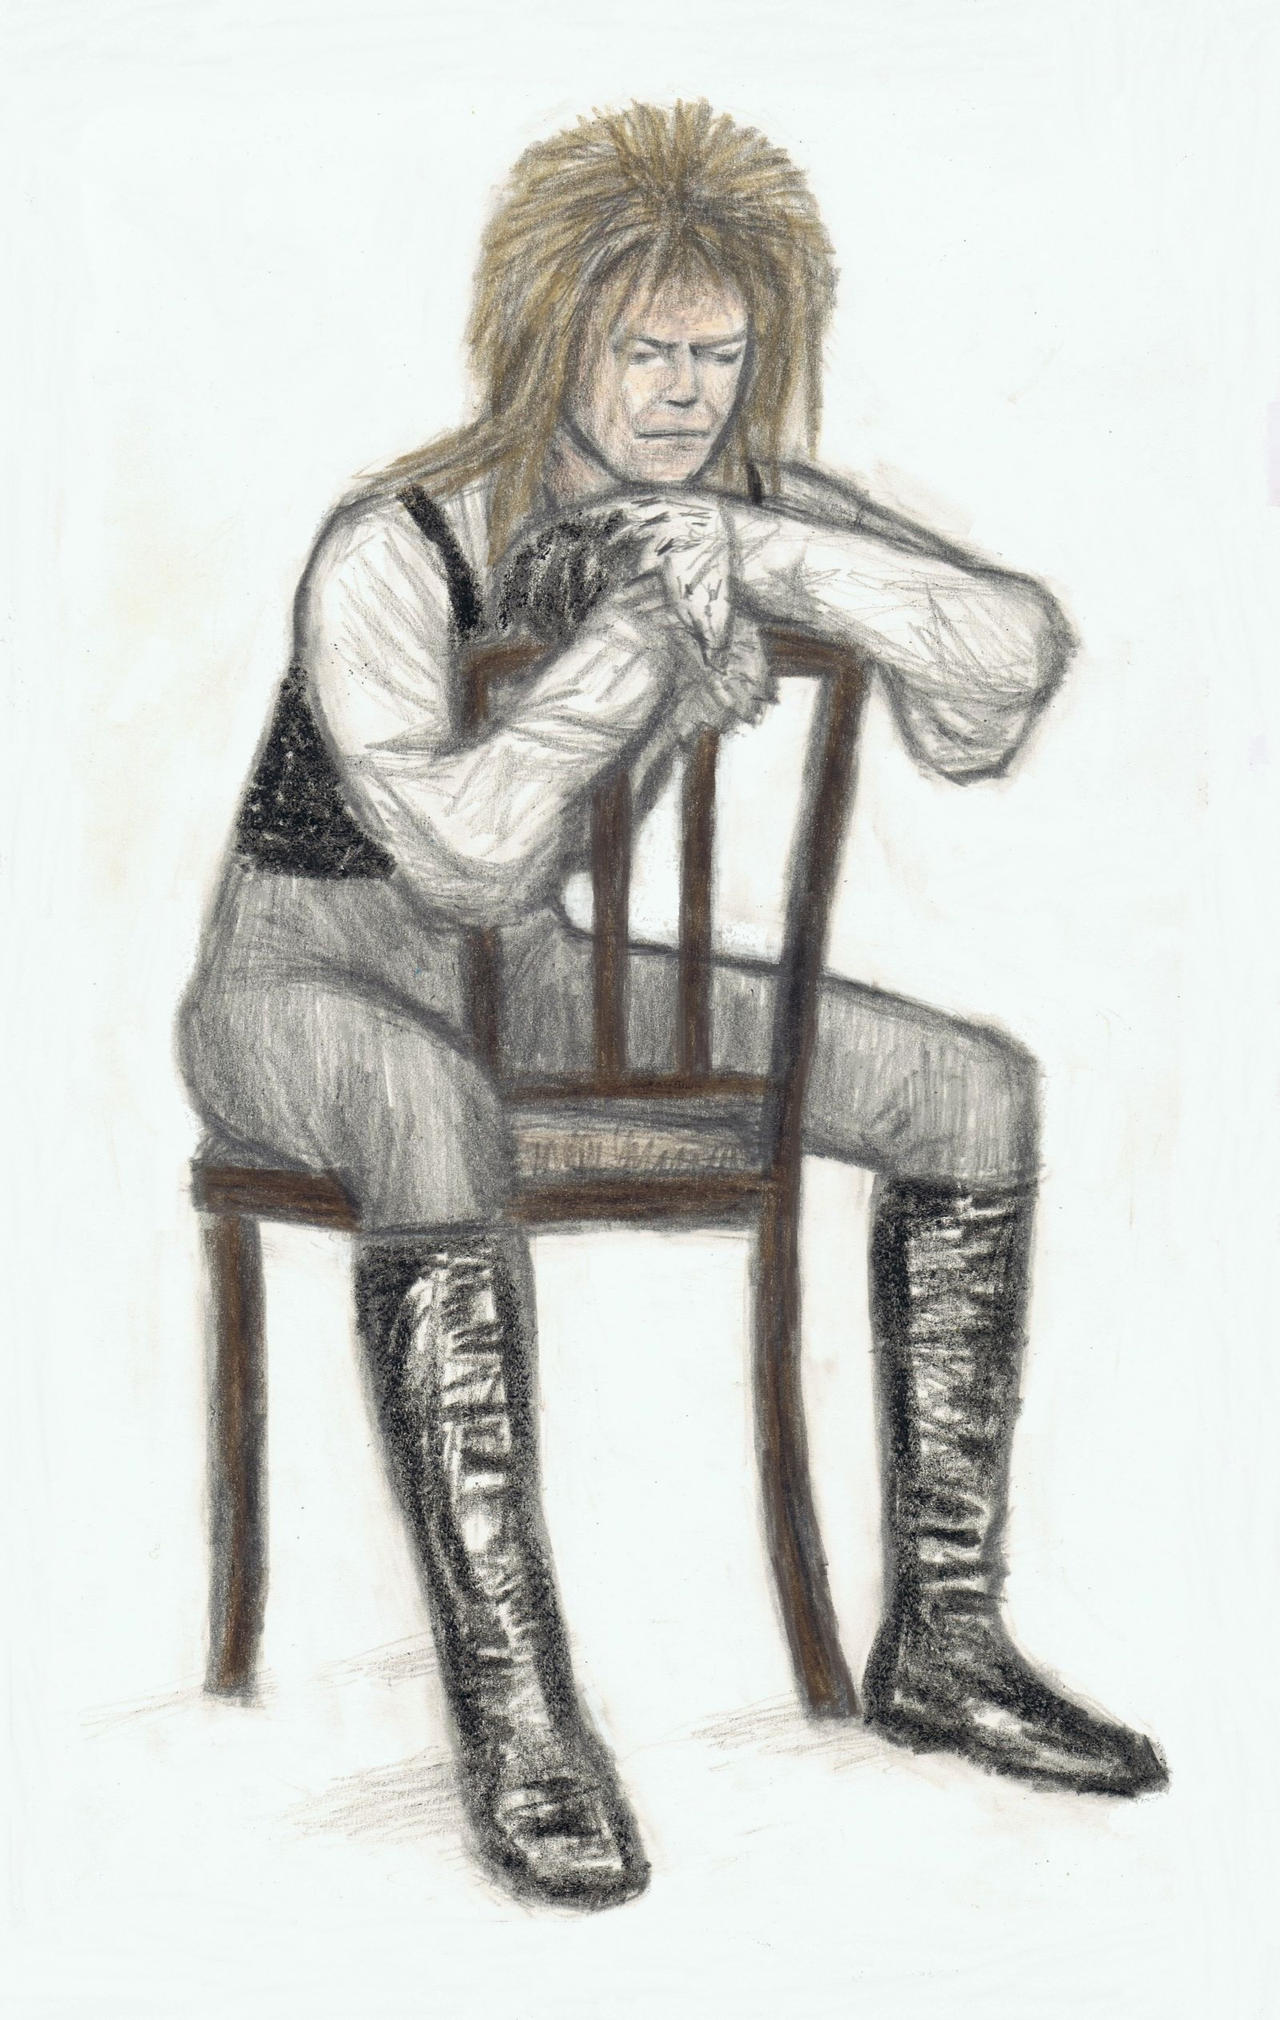 King Jareth sitting on a plain chair